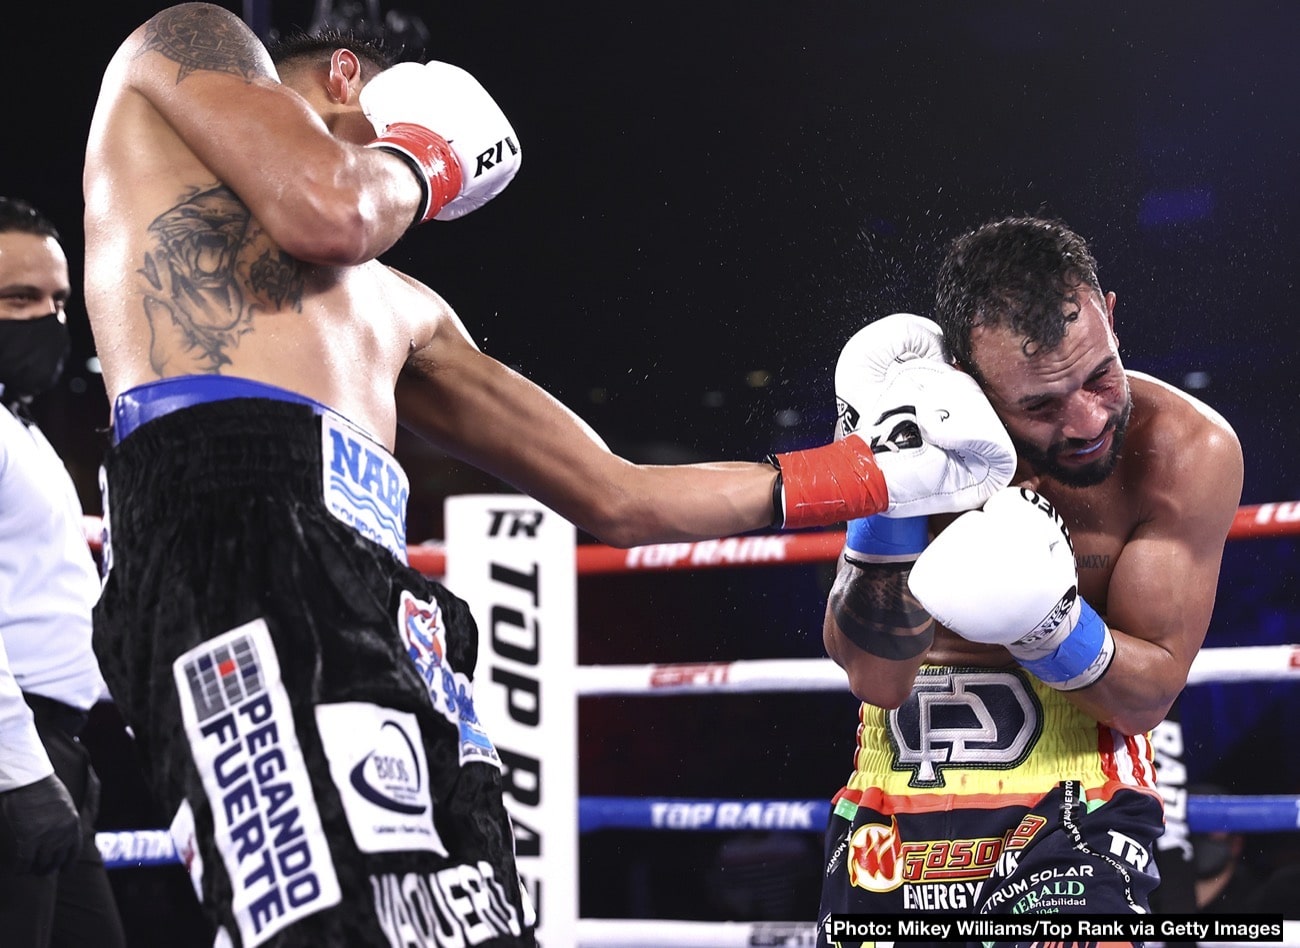 Emanuel Navarrete boxing image / photo